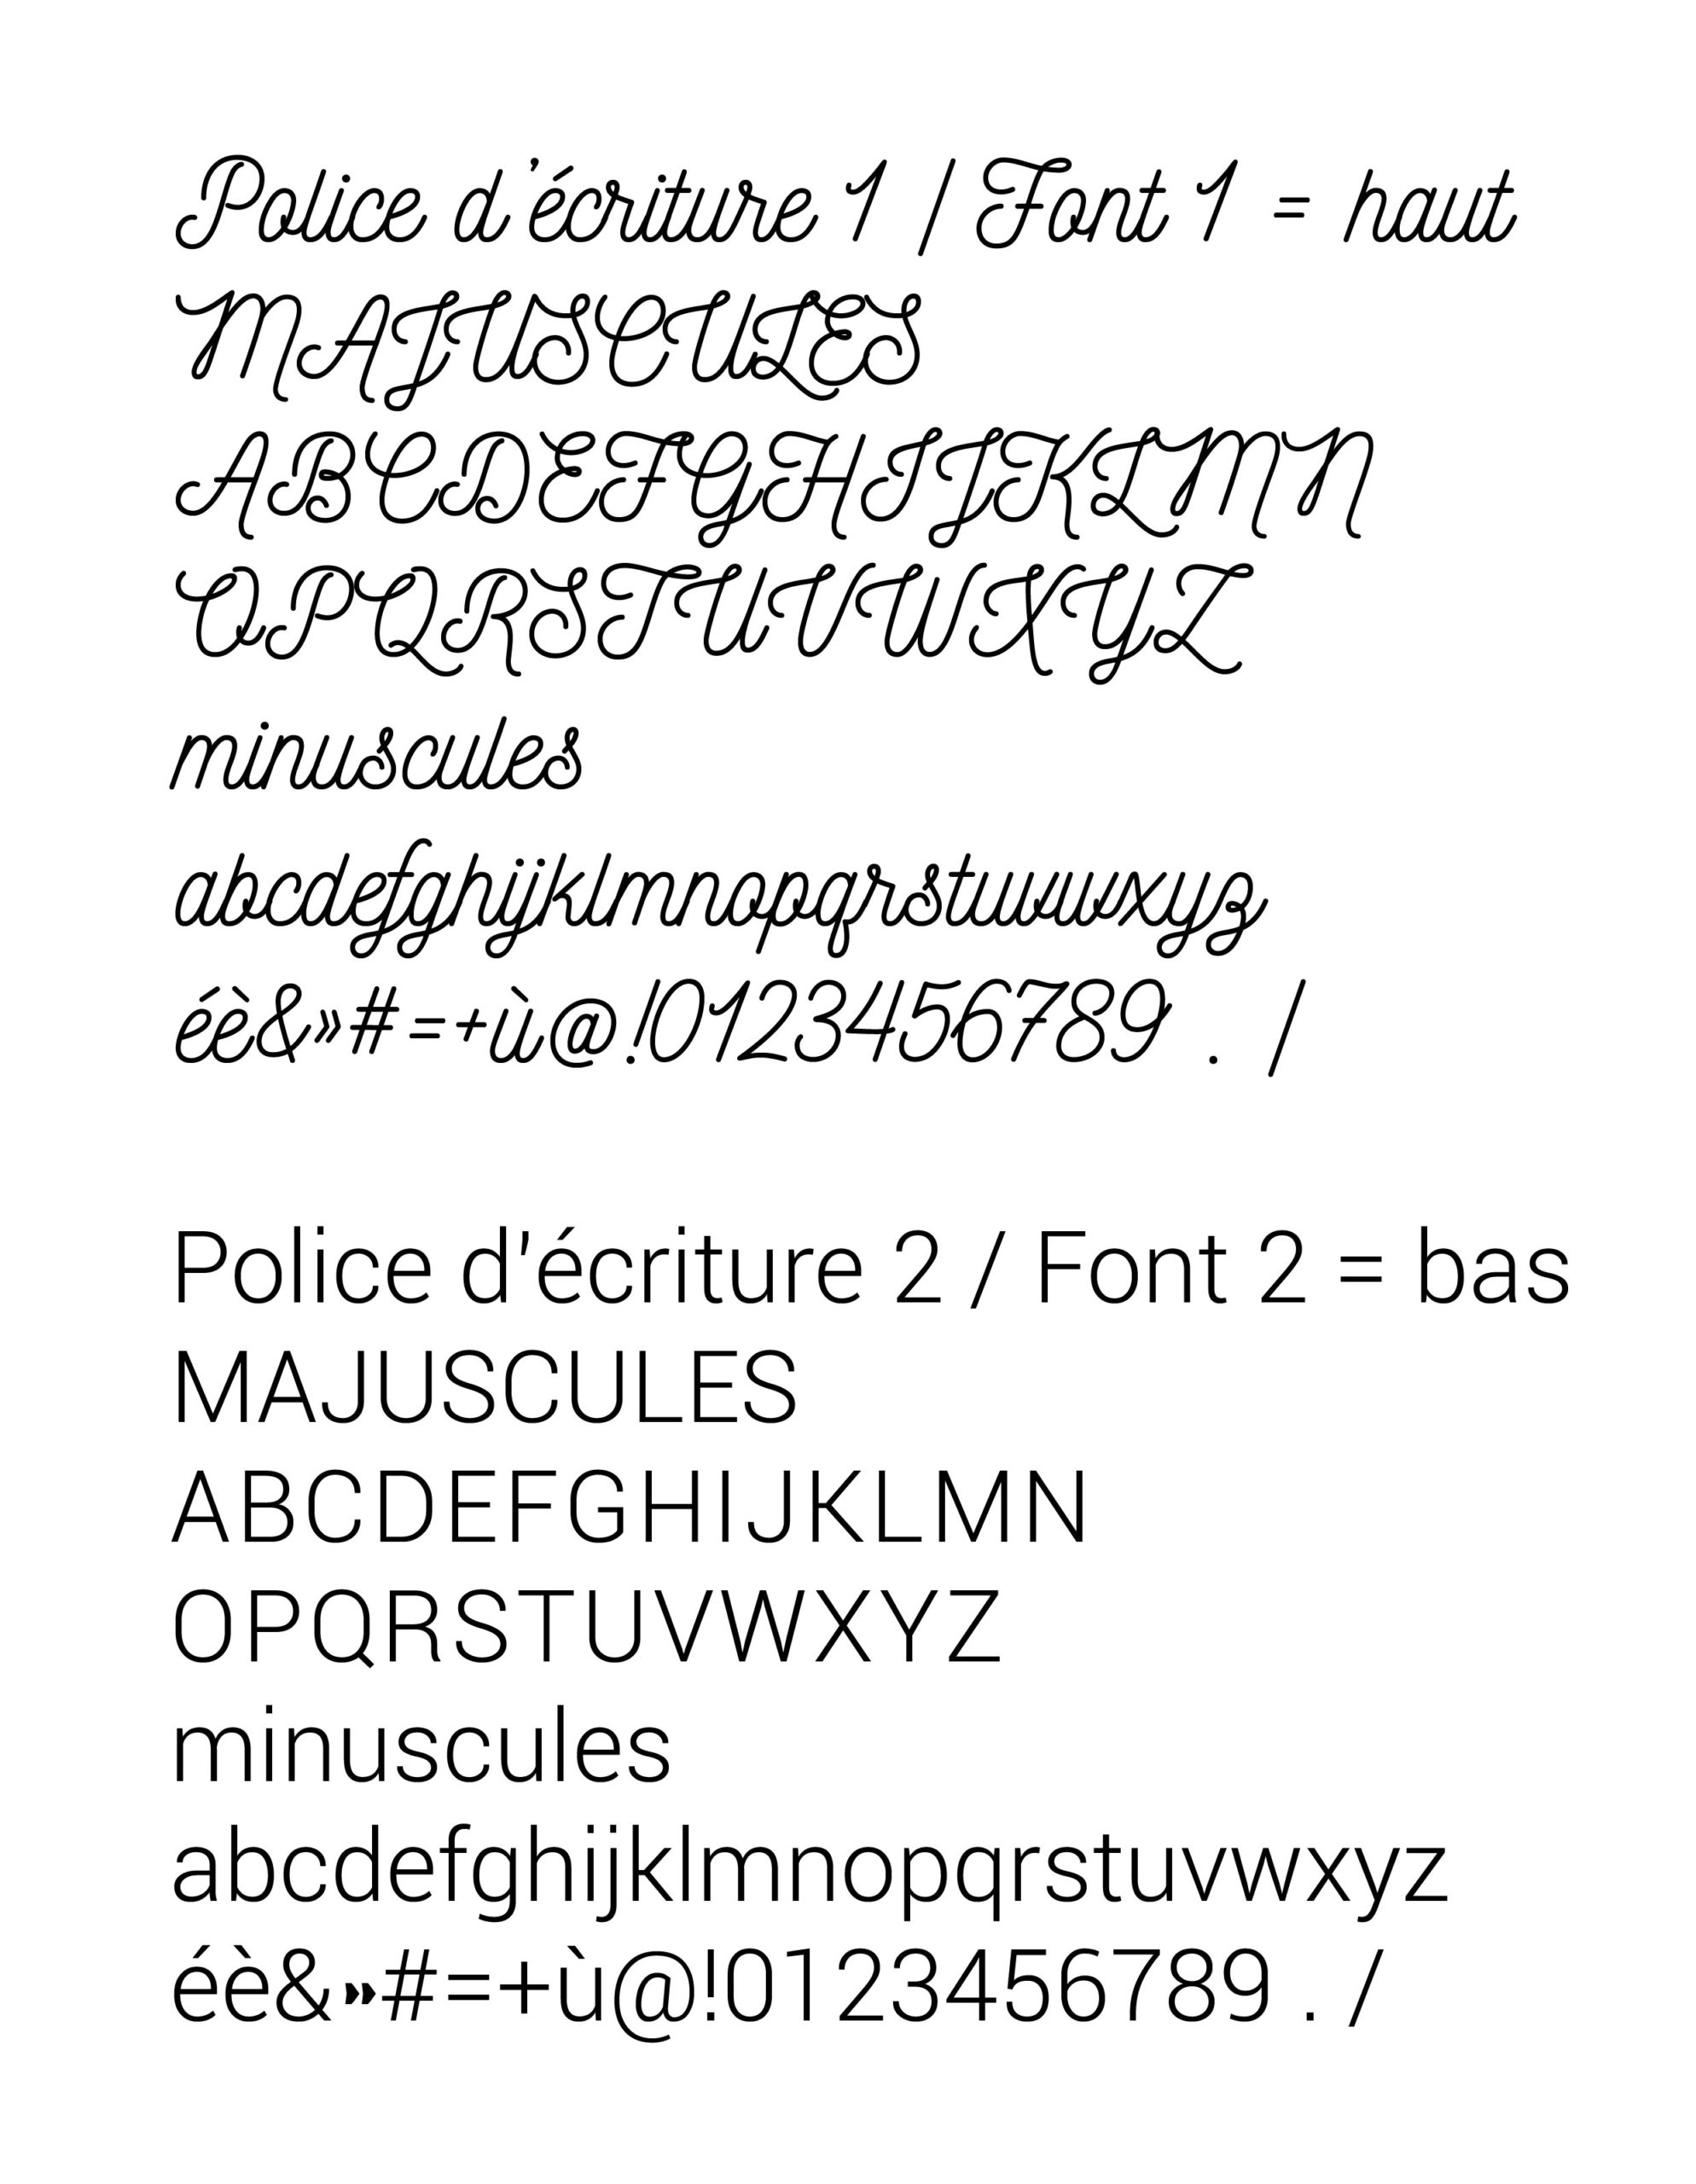 Tampons Alphabet serif majuscules